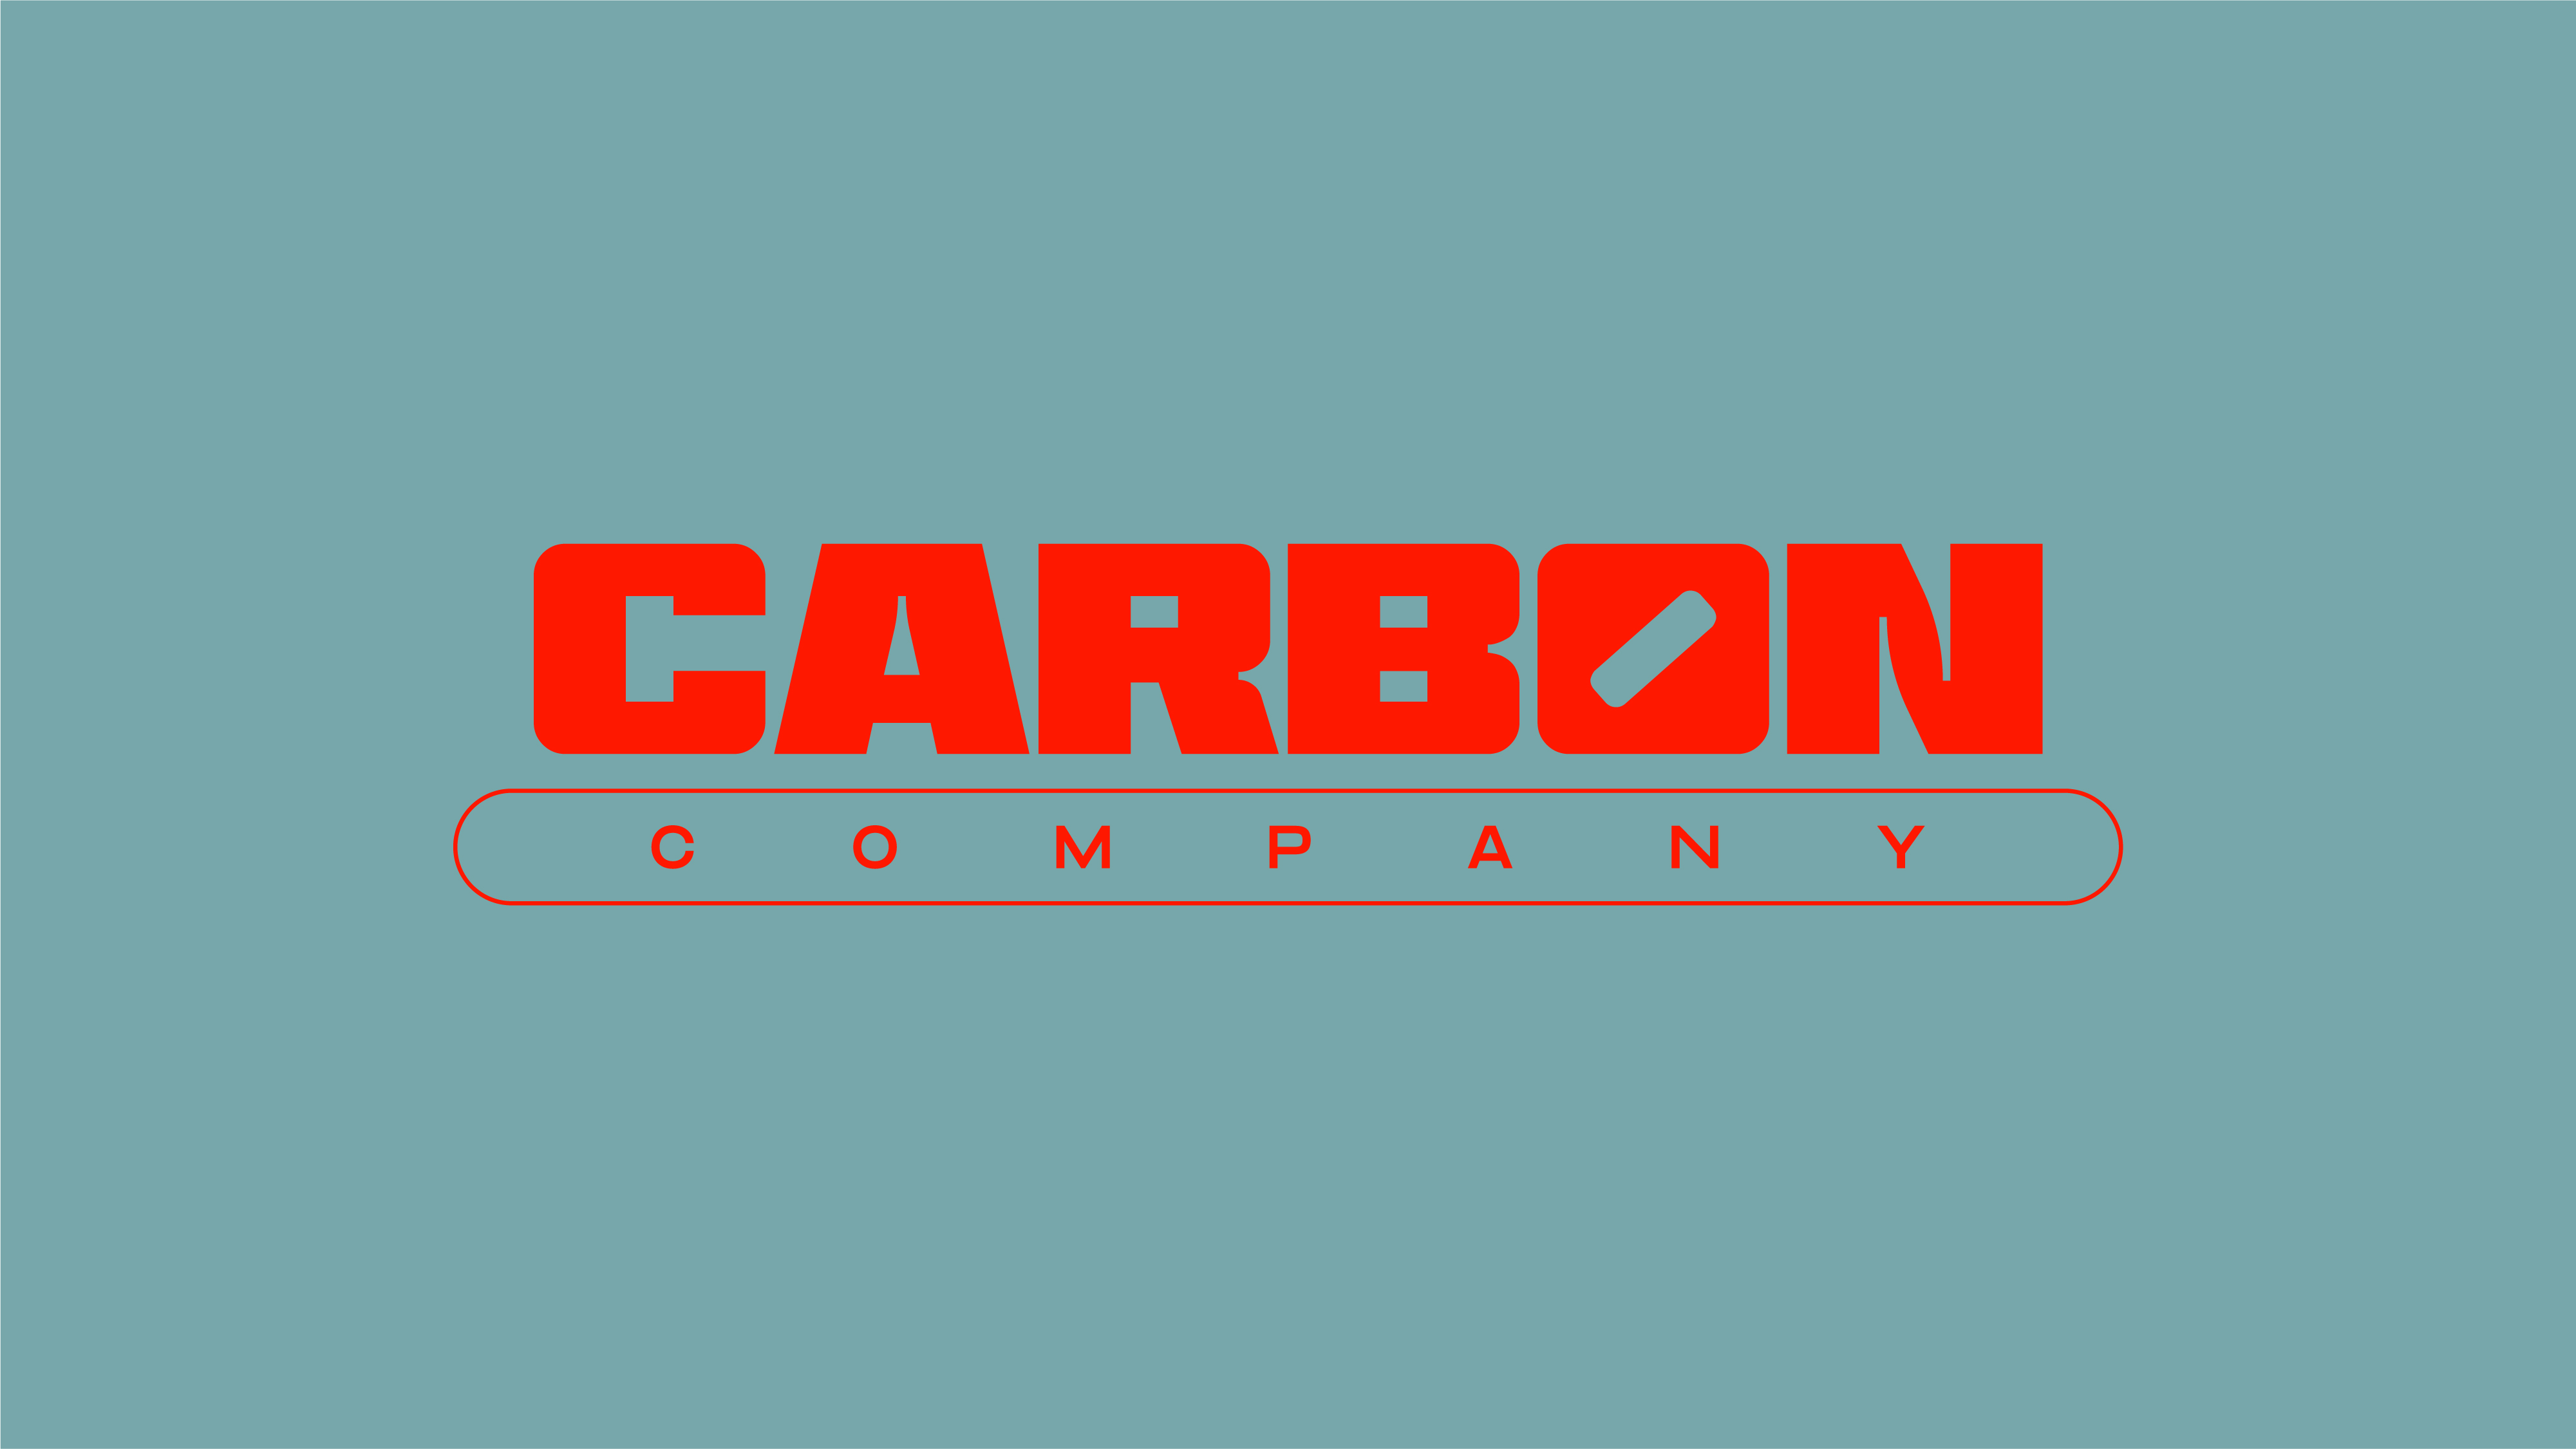 GMK_2021_BERK_Carbon_CoArtboard 1 copy 22@150x-100